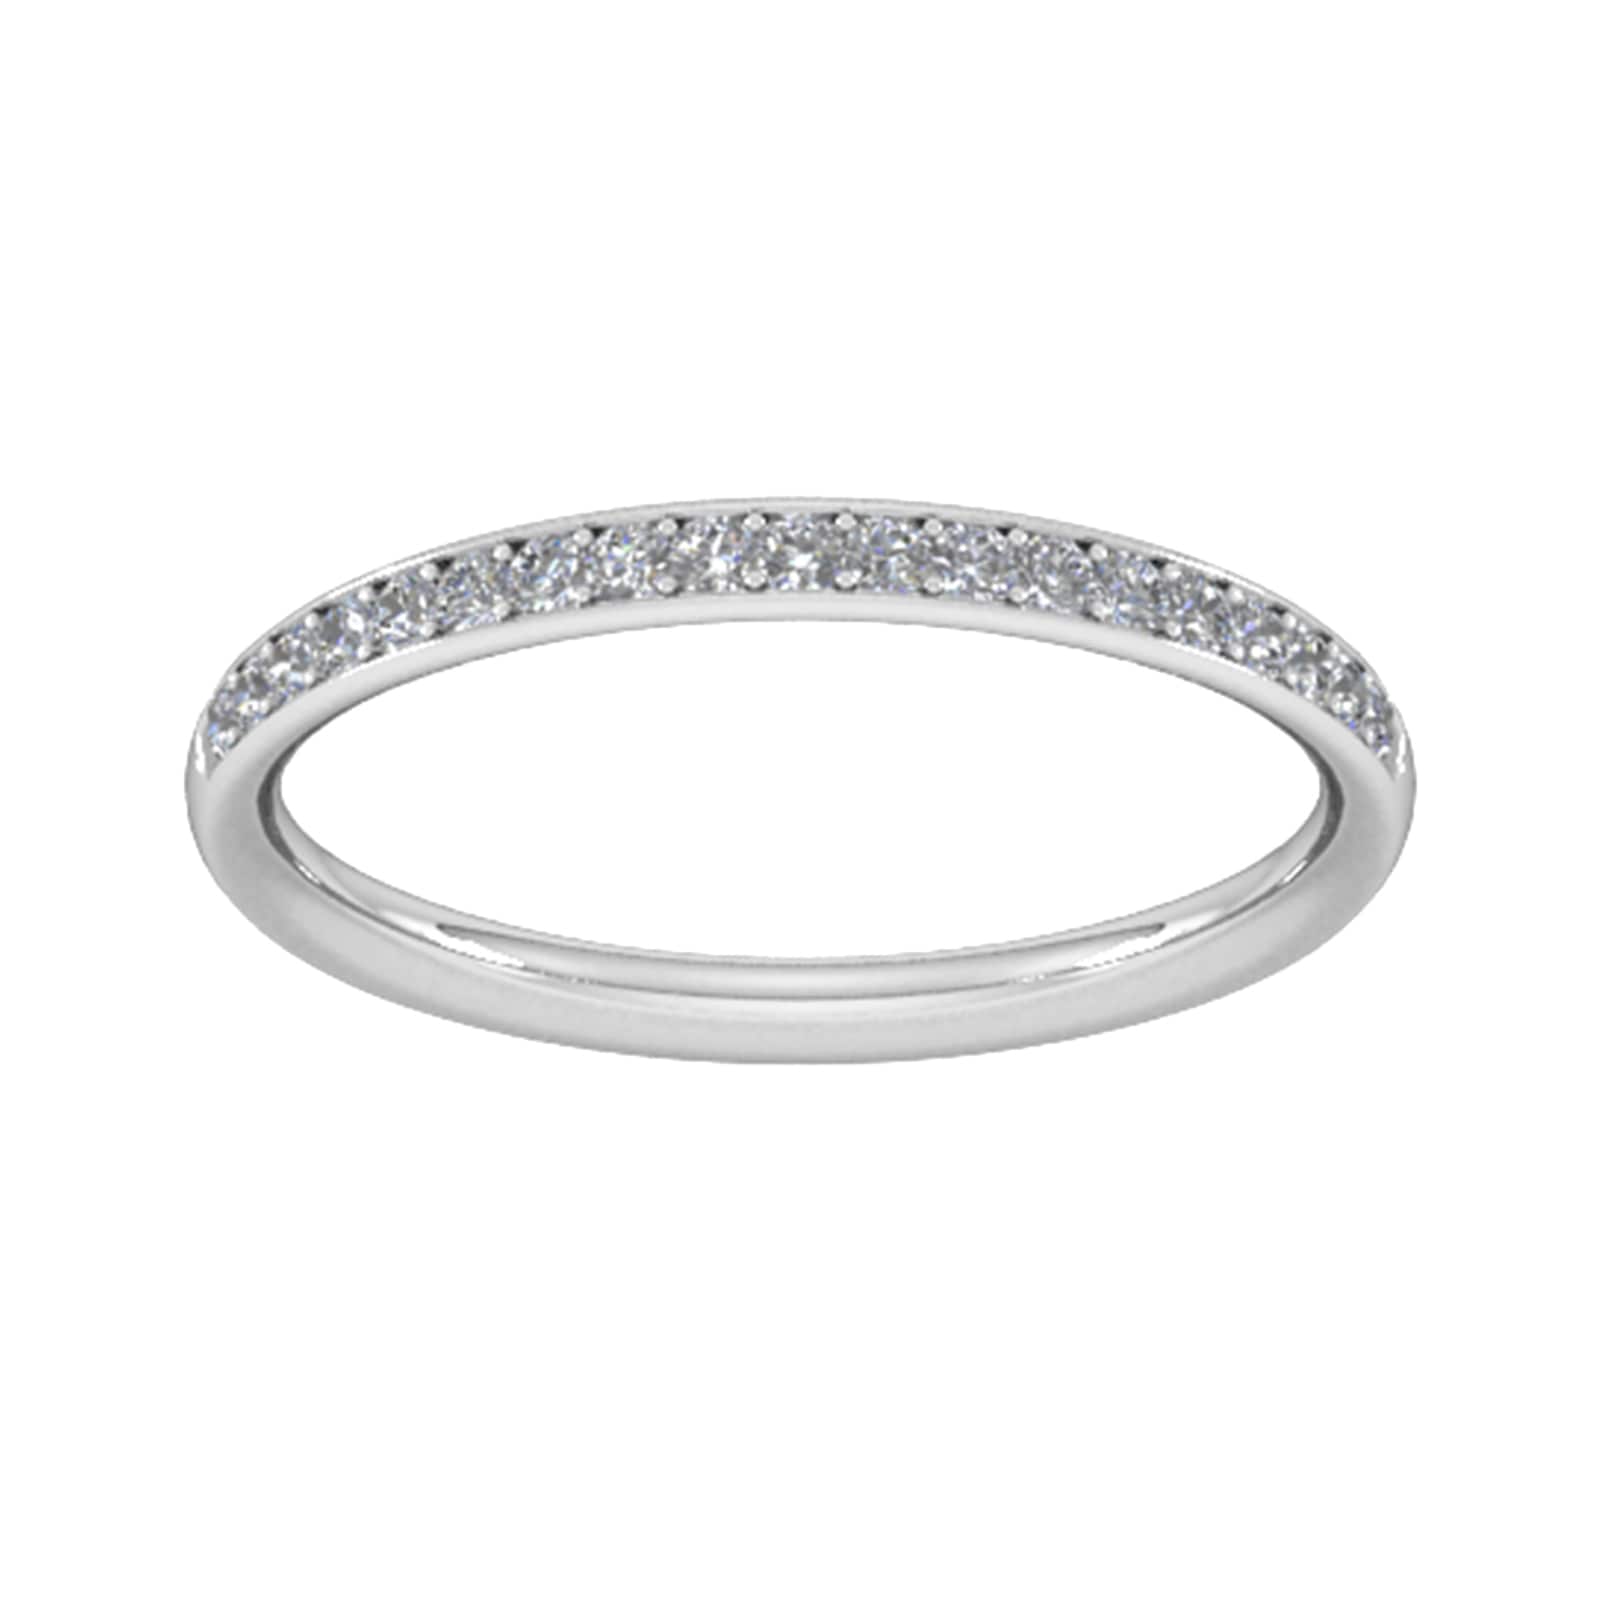 0.18 Carat Total Weight Brilliant Cut Grain Set Diamond Wedding Ring In Platinum - Ring Size P